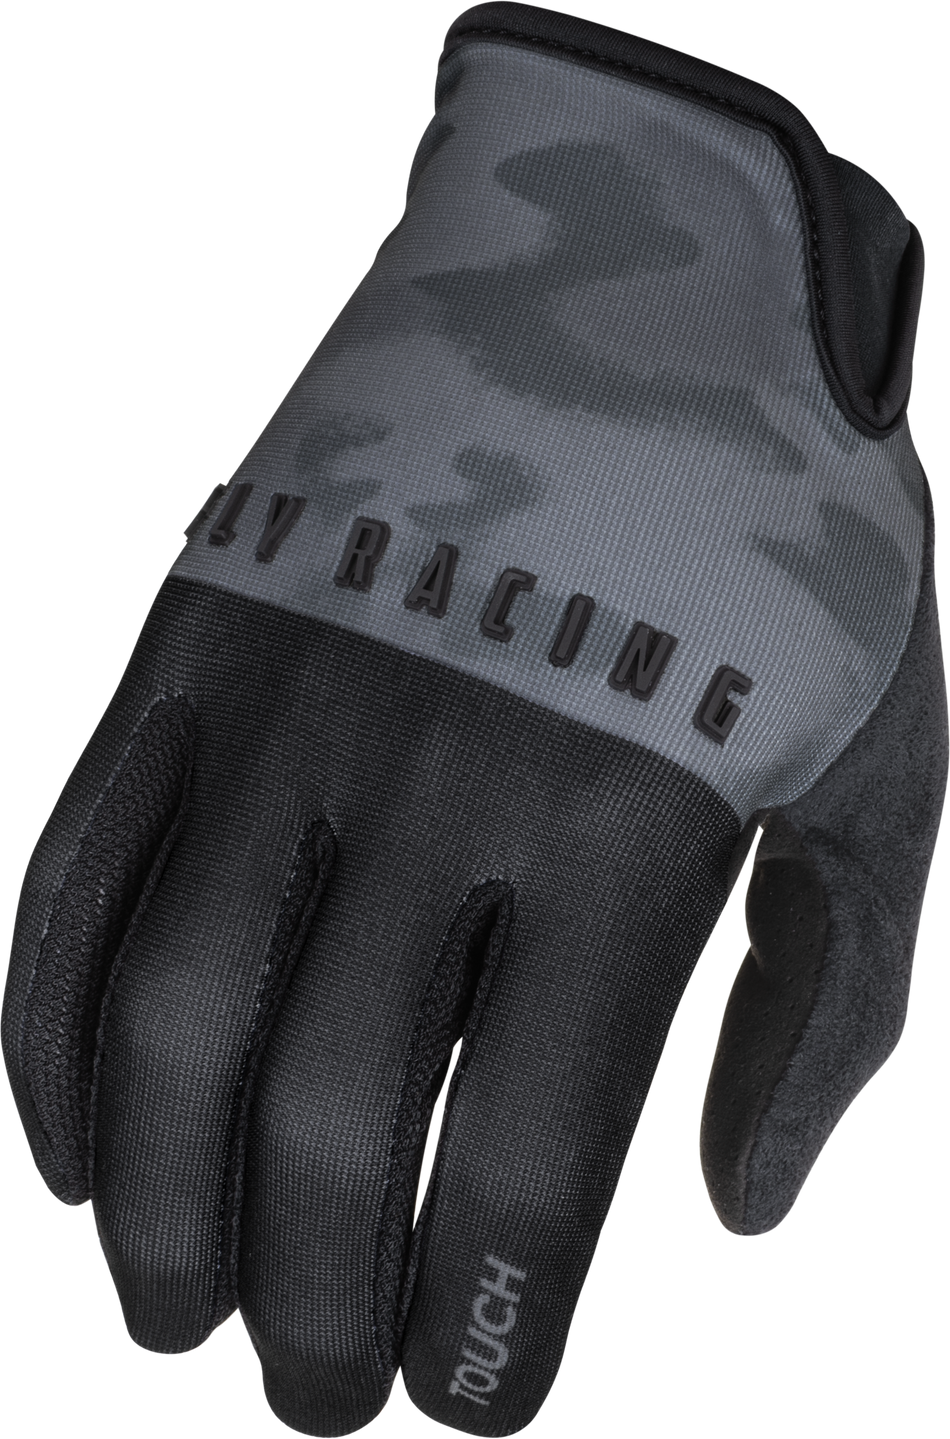 FLY RACING Media Gloves Black/Grey Camo Xl 350-0121X